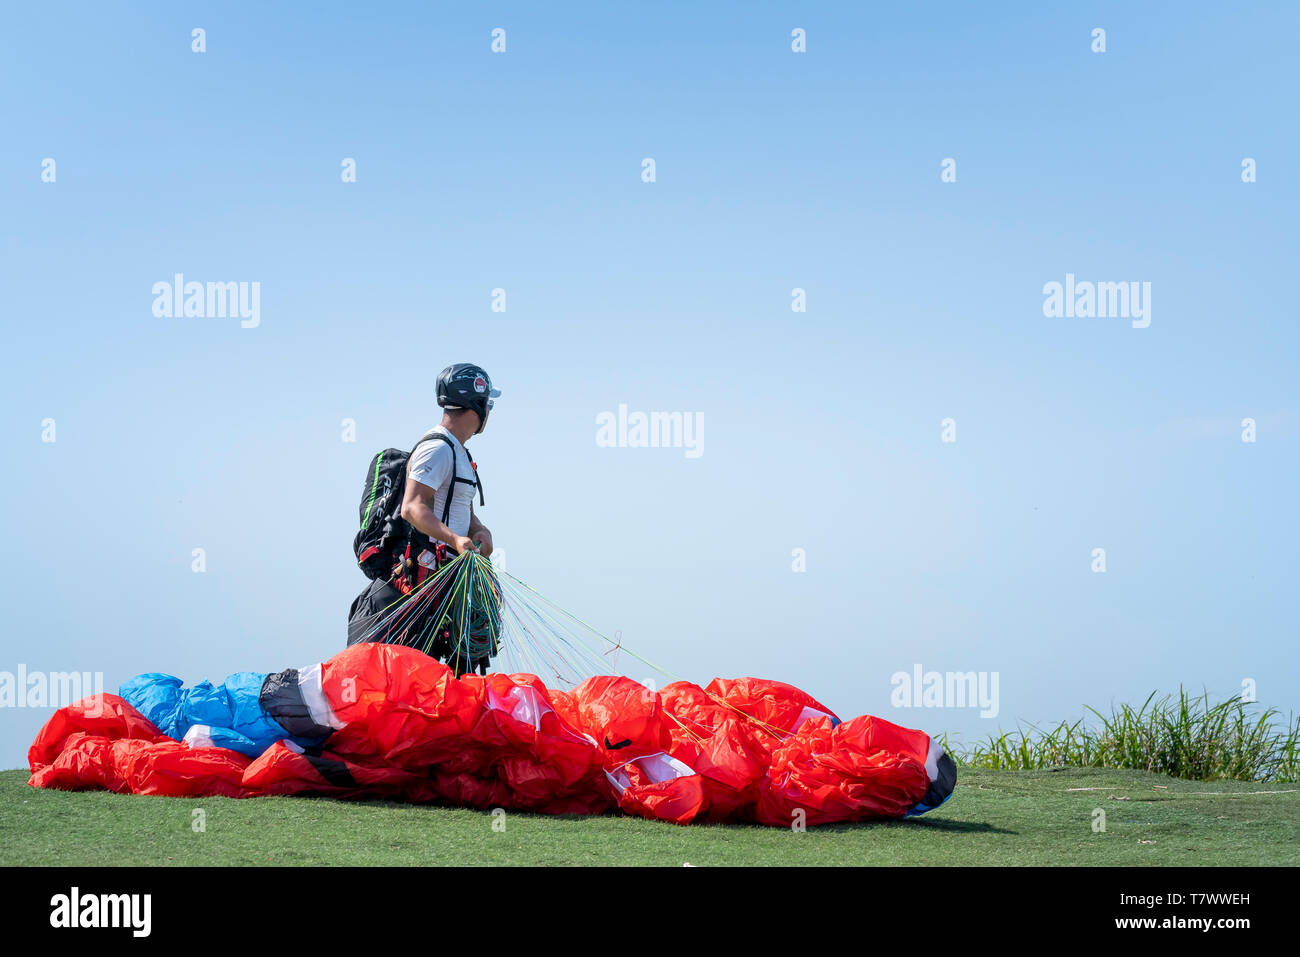 Son Tra Peninsula, Da Nang city, Vietnam - April 27, 2019: Athletes are preparing before flying paragliding on top of Son Tra Mountain. Stock Photo